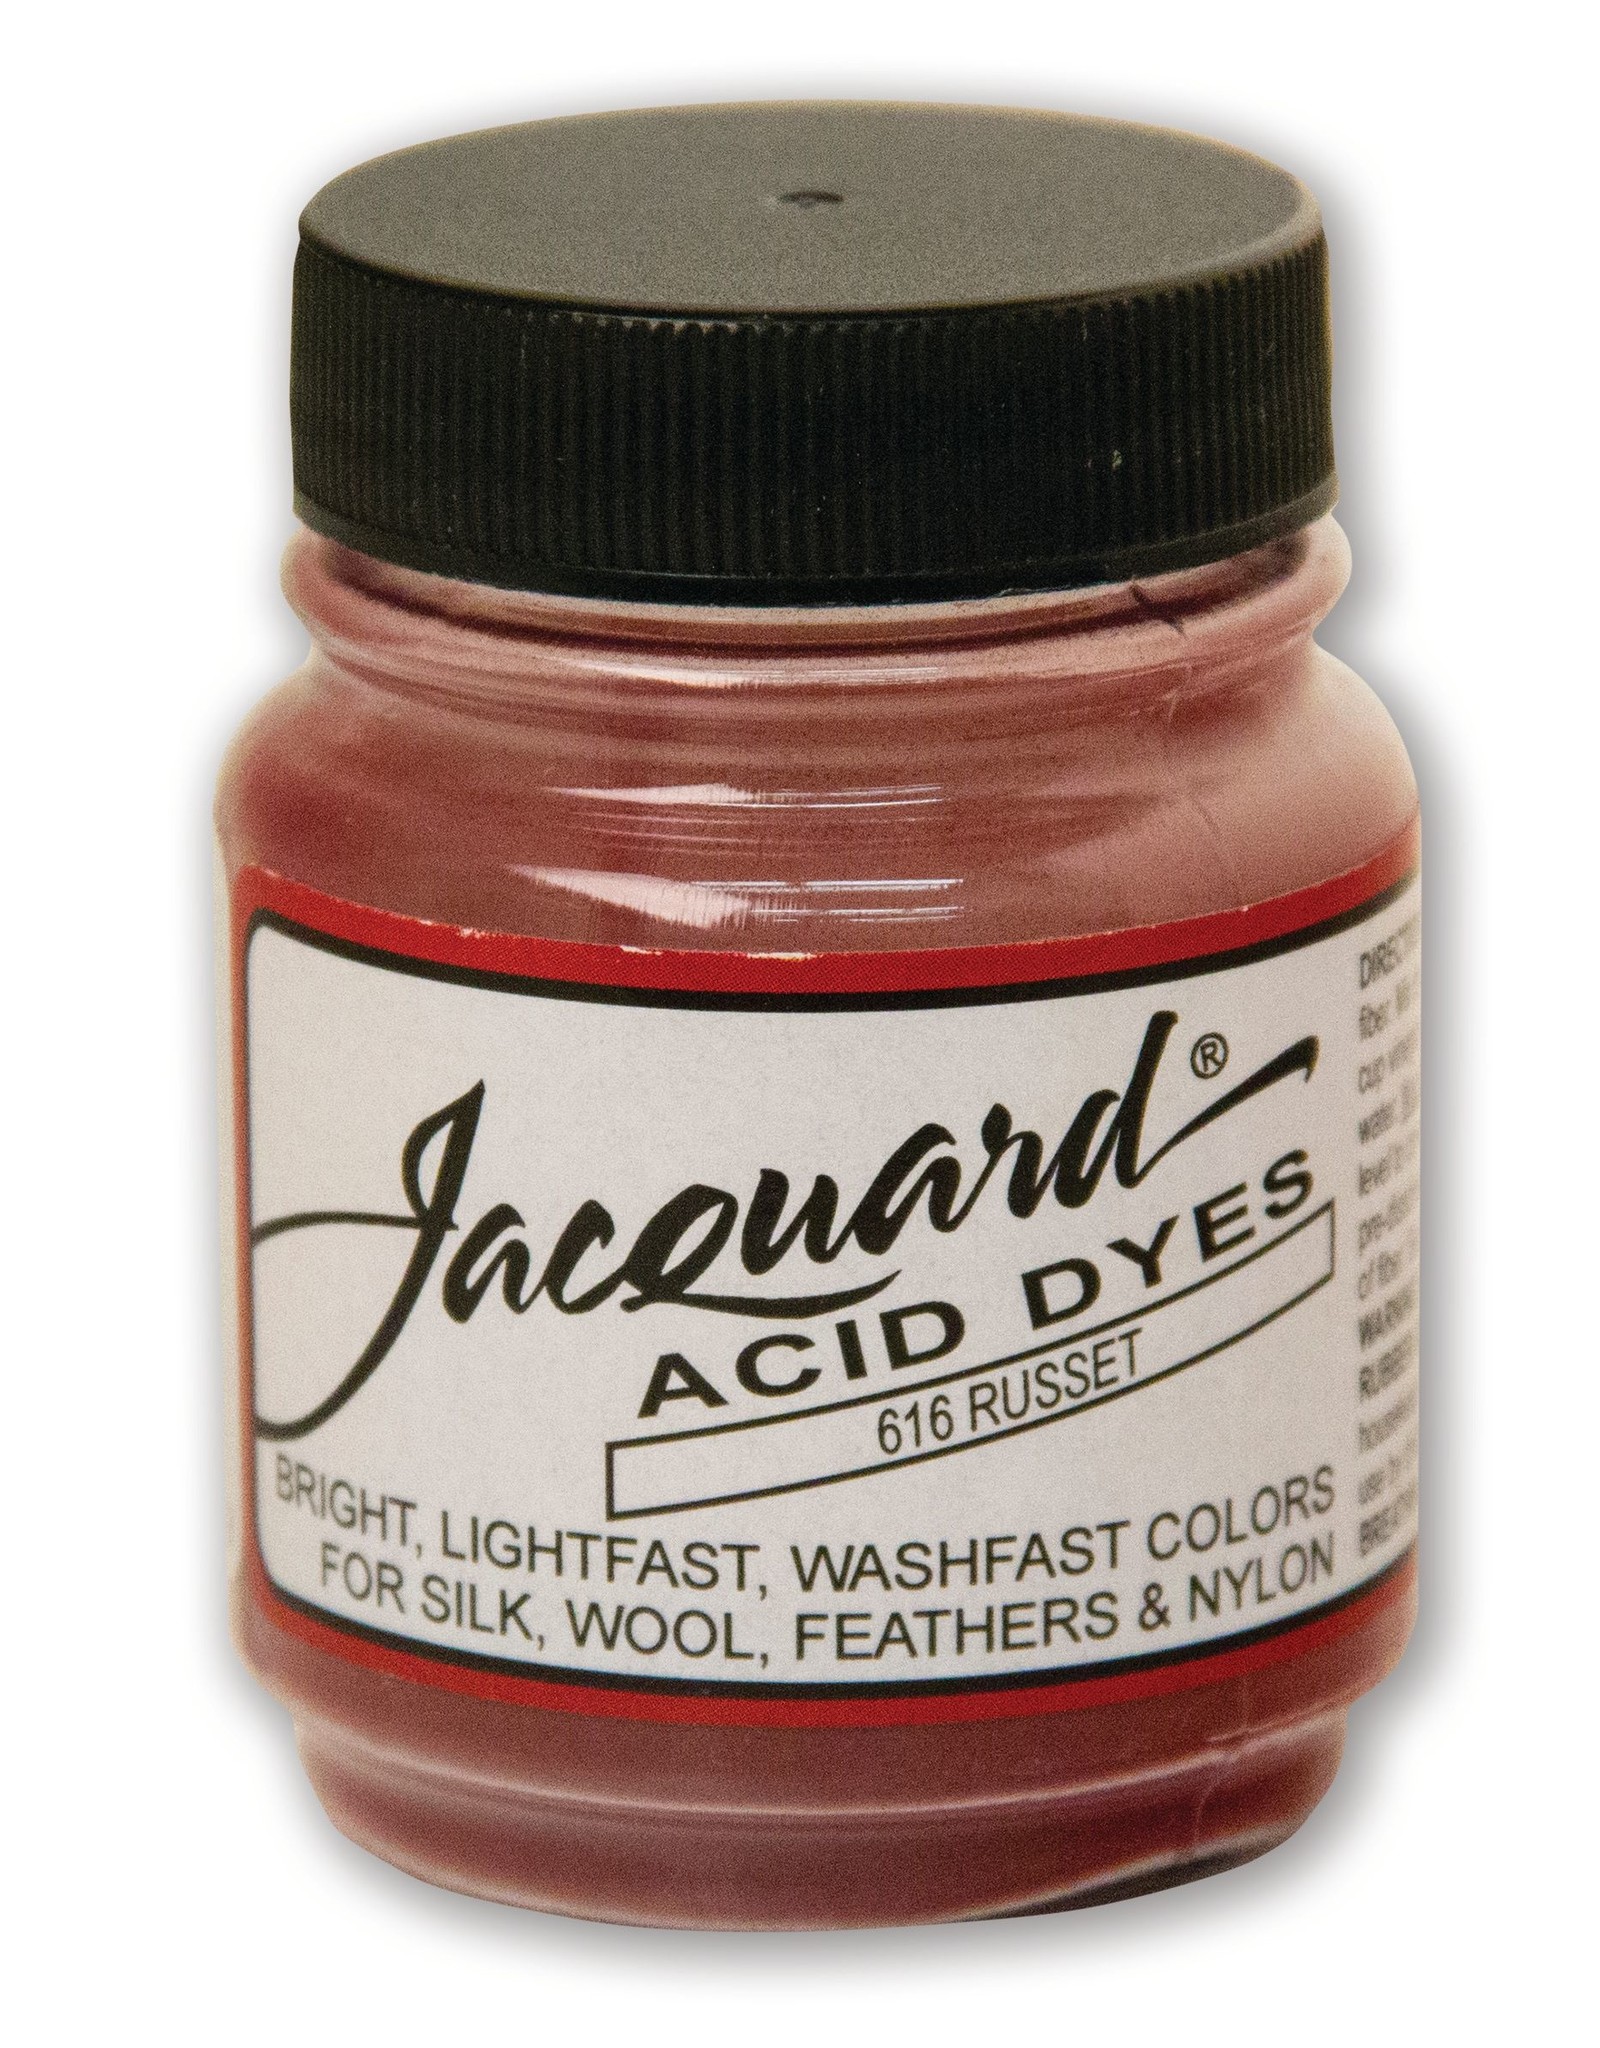 Jacquard Jacquard Acid Dye, #616 Russet ½oz